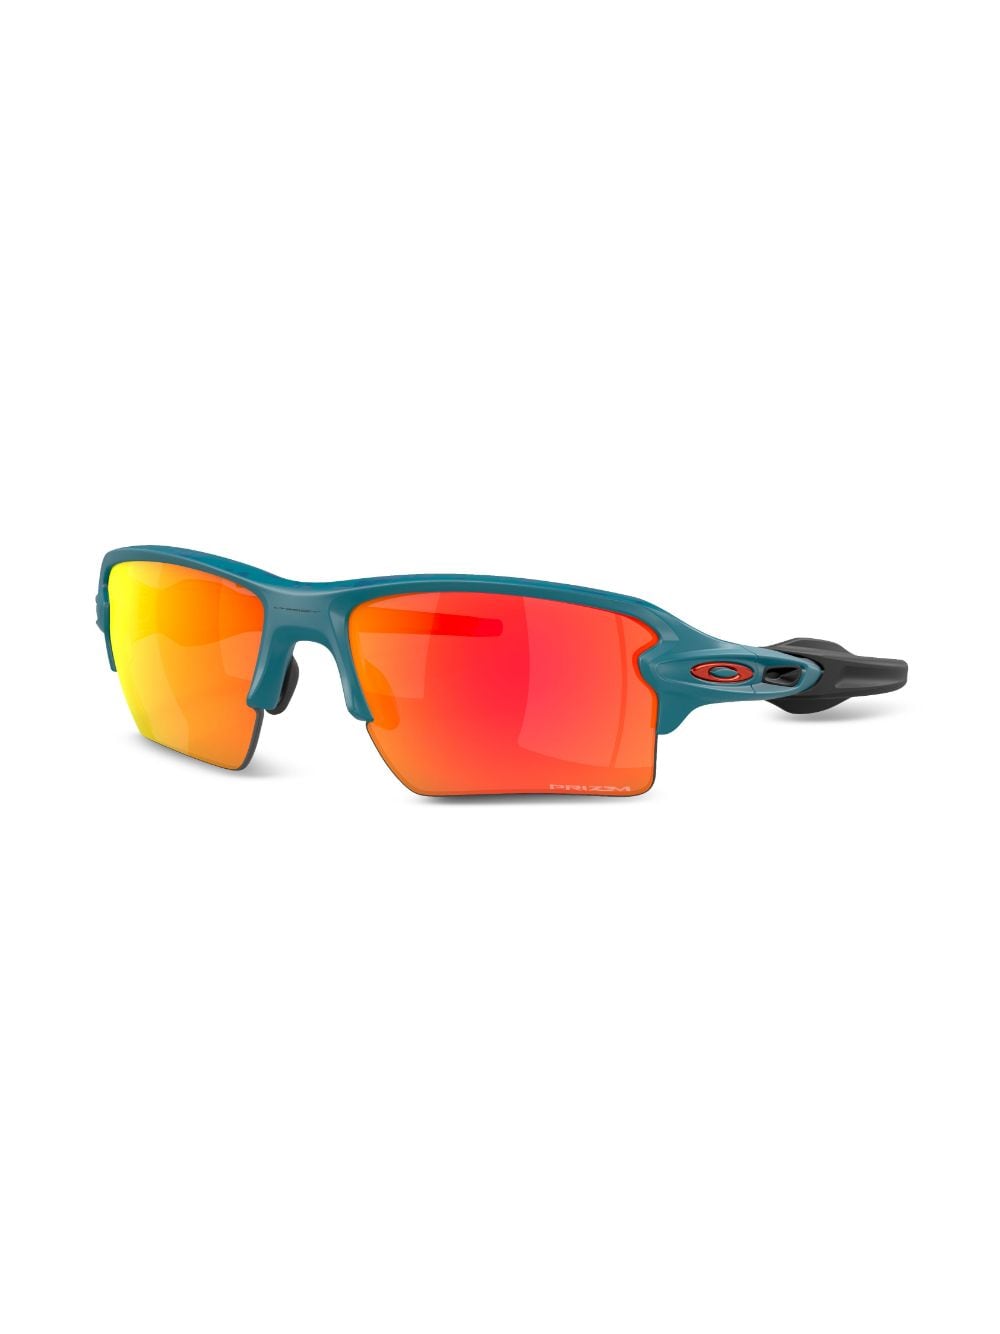 Flak 2.0 rectangle-frame sunglasses<BR/><BR/>